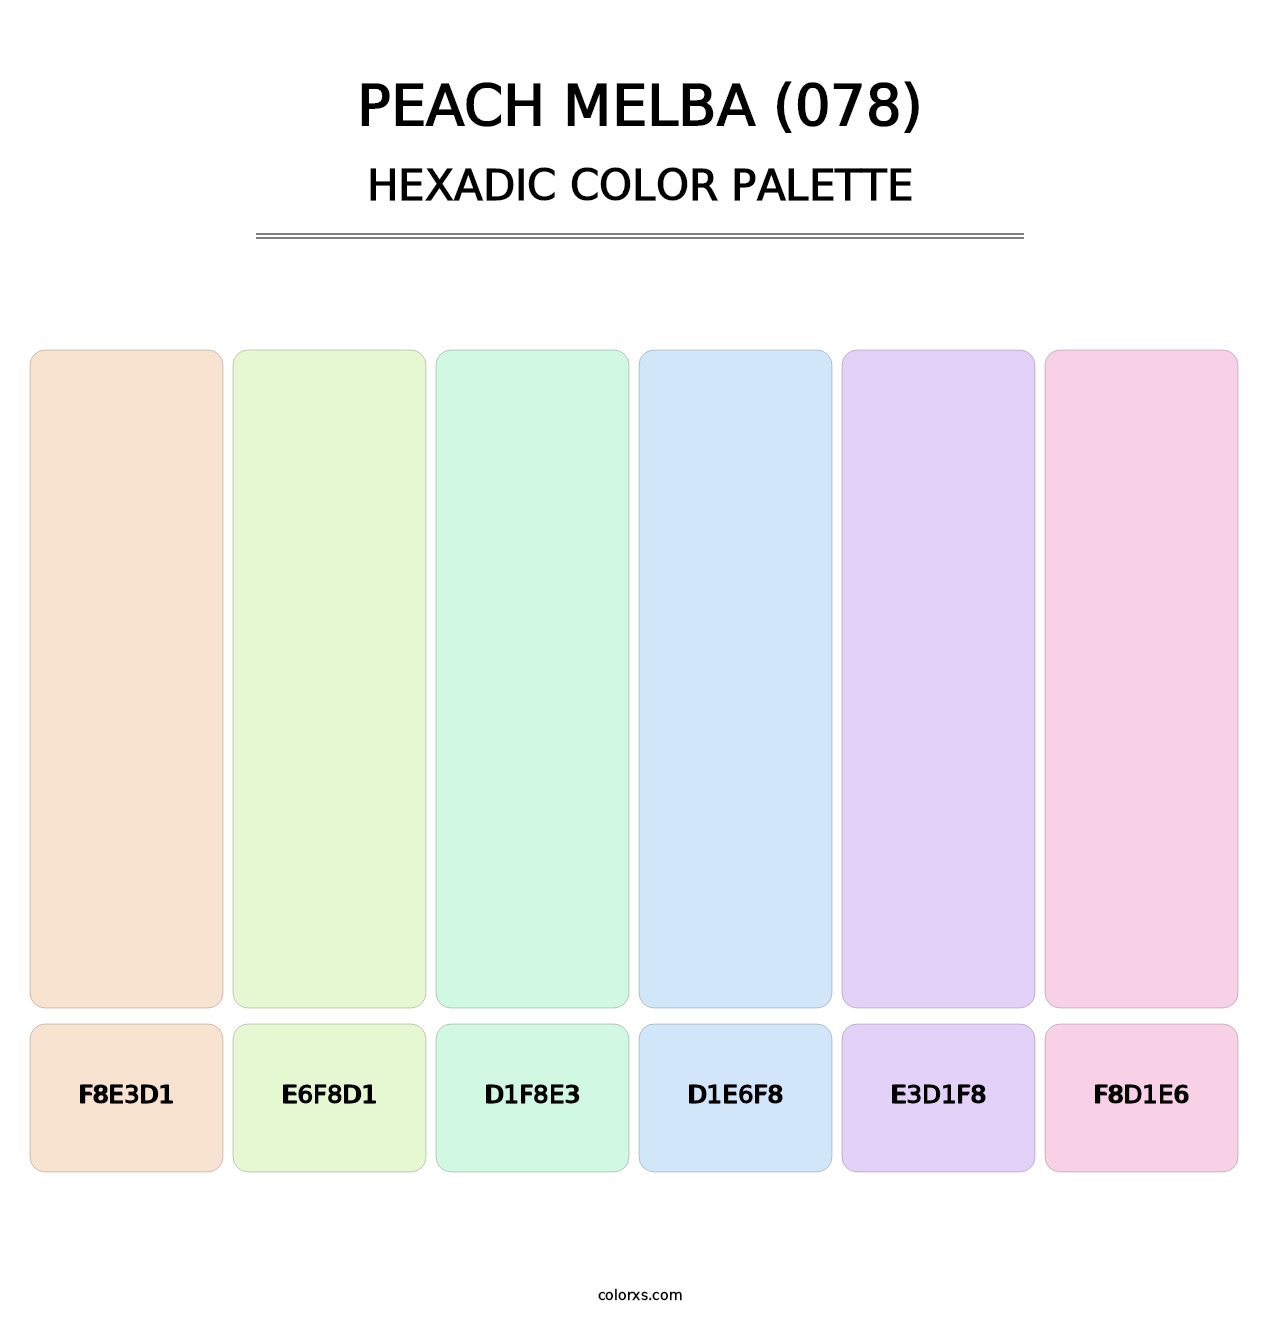 Peach Melba (078) - Hexadic Color Palette